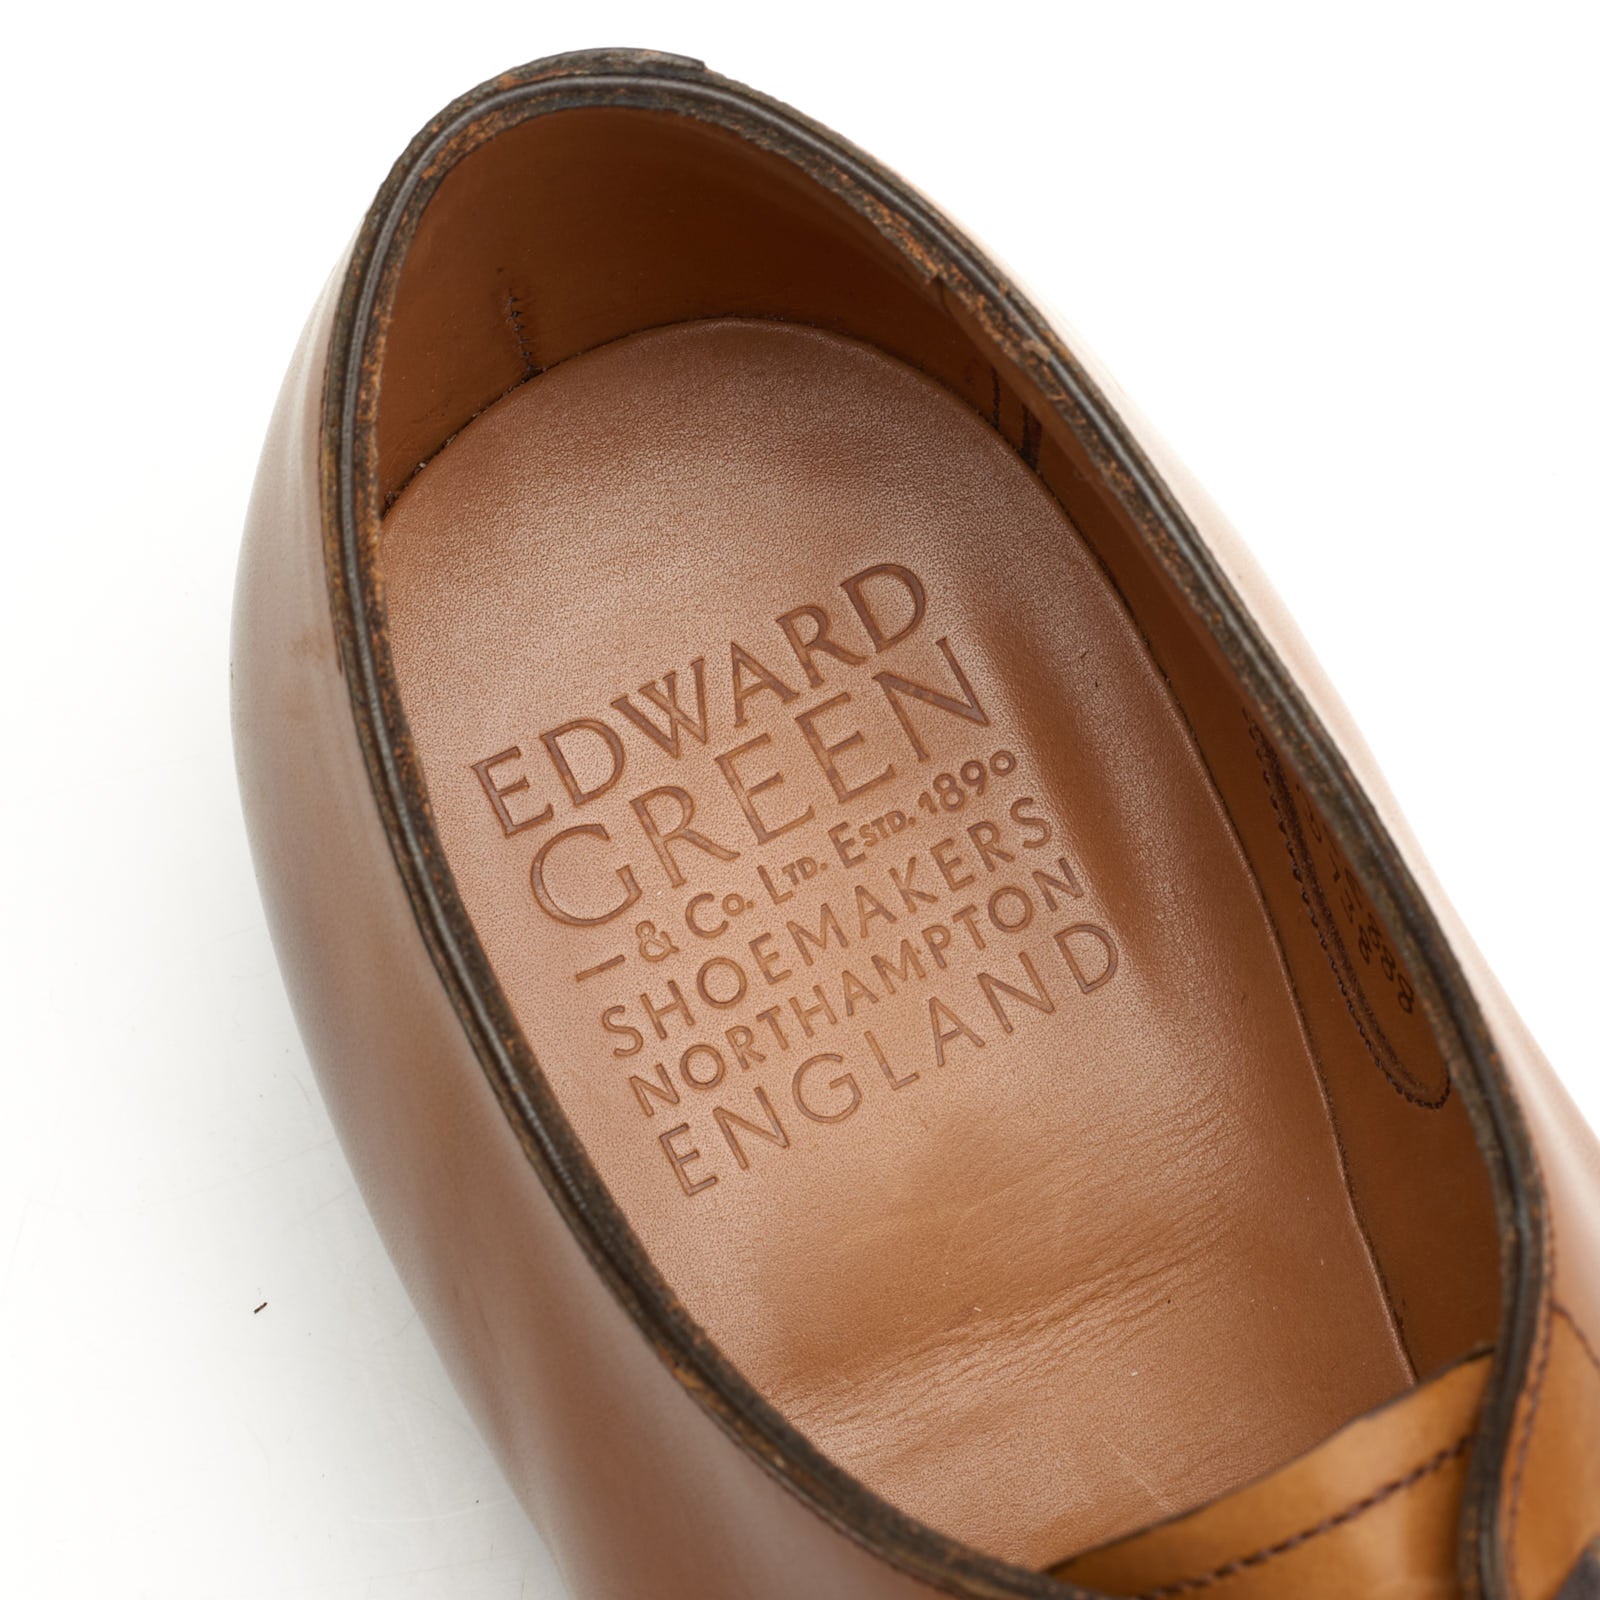 EDWARD GREEN Dover 888 Antique Oak Norwegian 3 Eyelet Derby Shoes UK 8 US 8.5 EDWARD GREEN